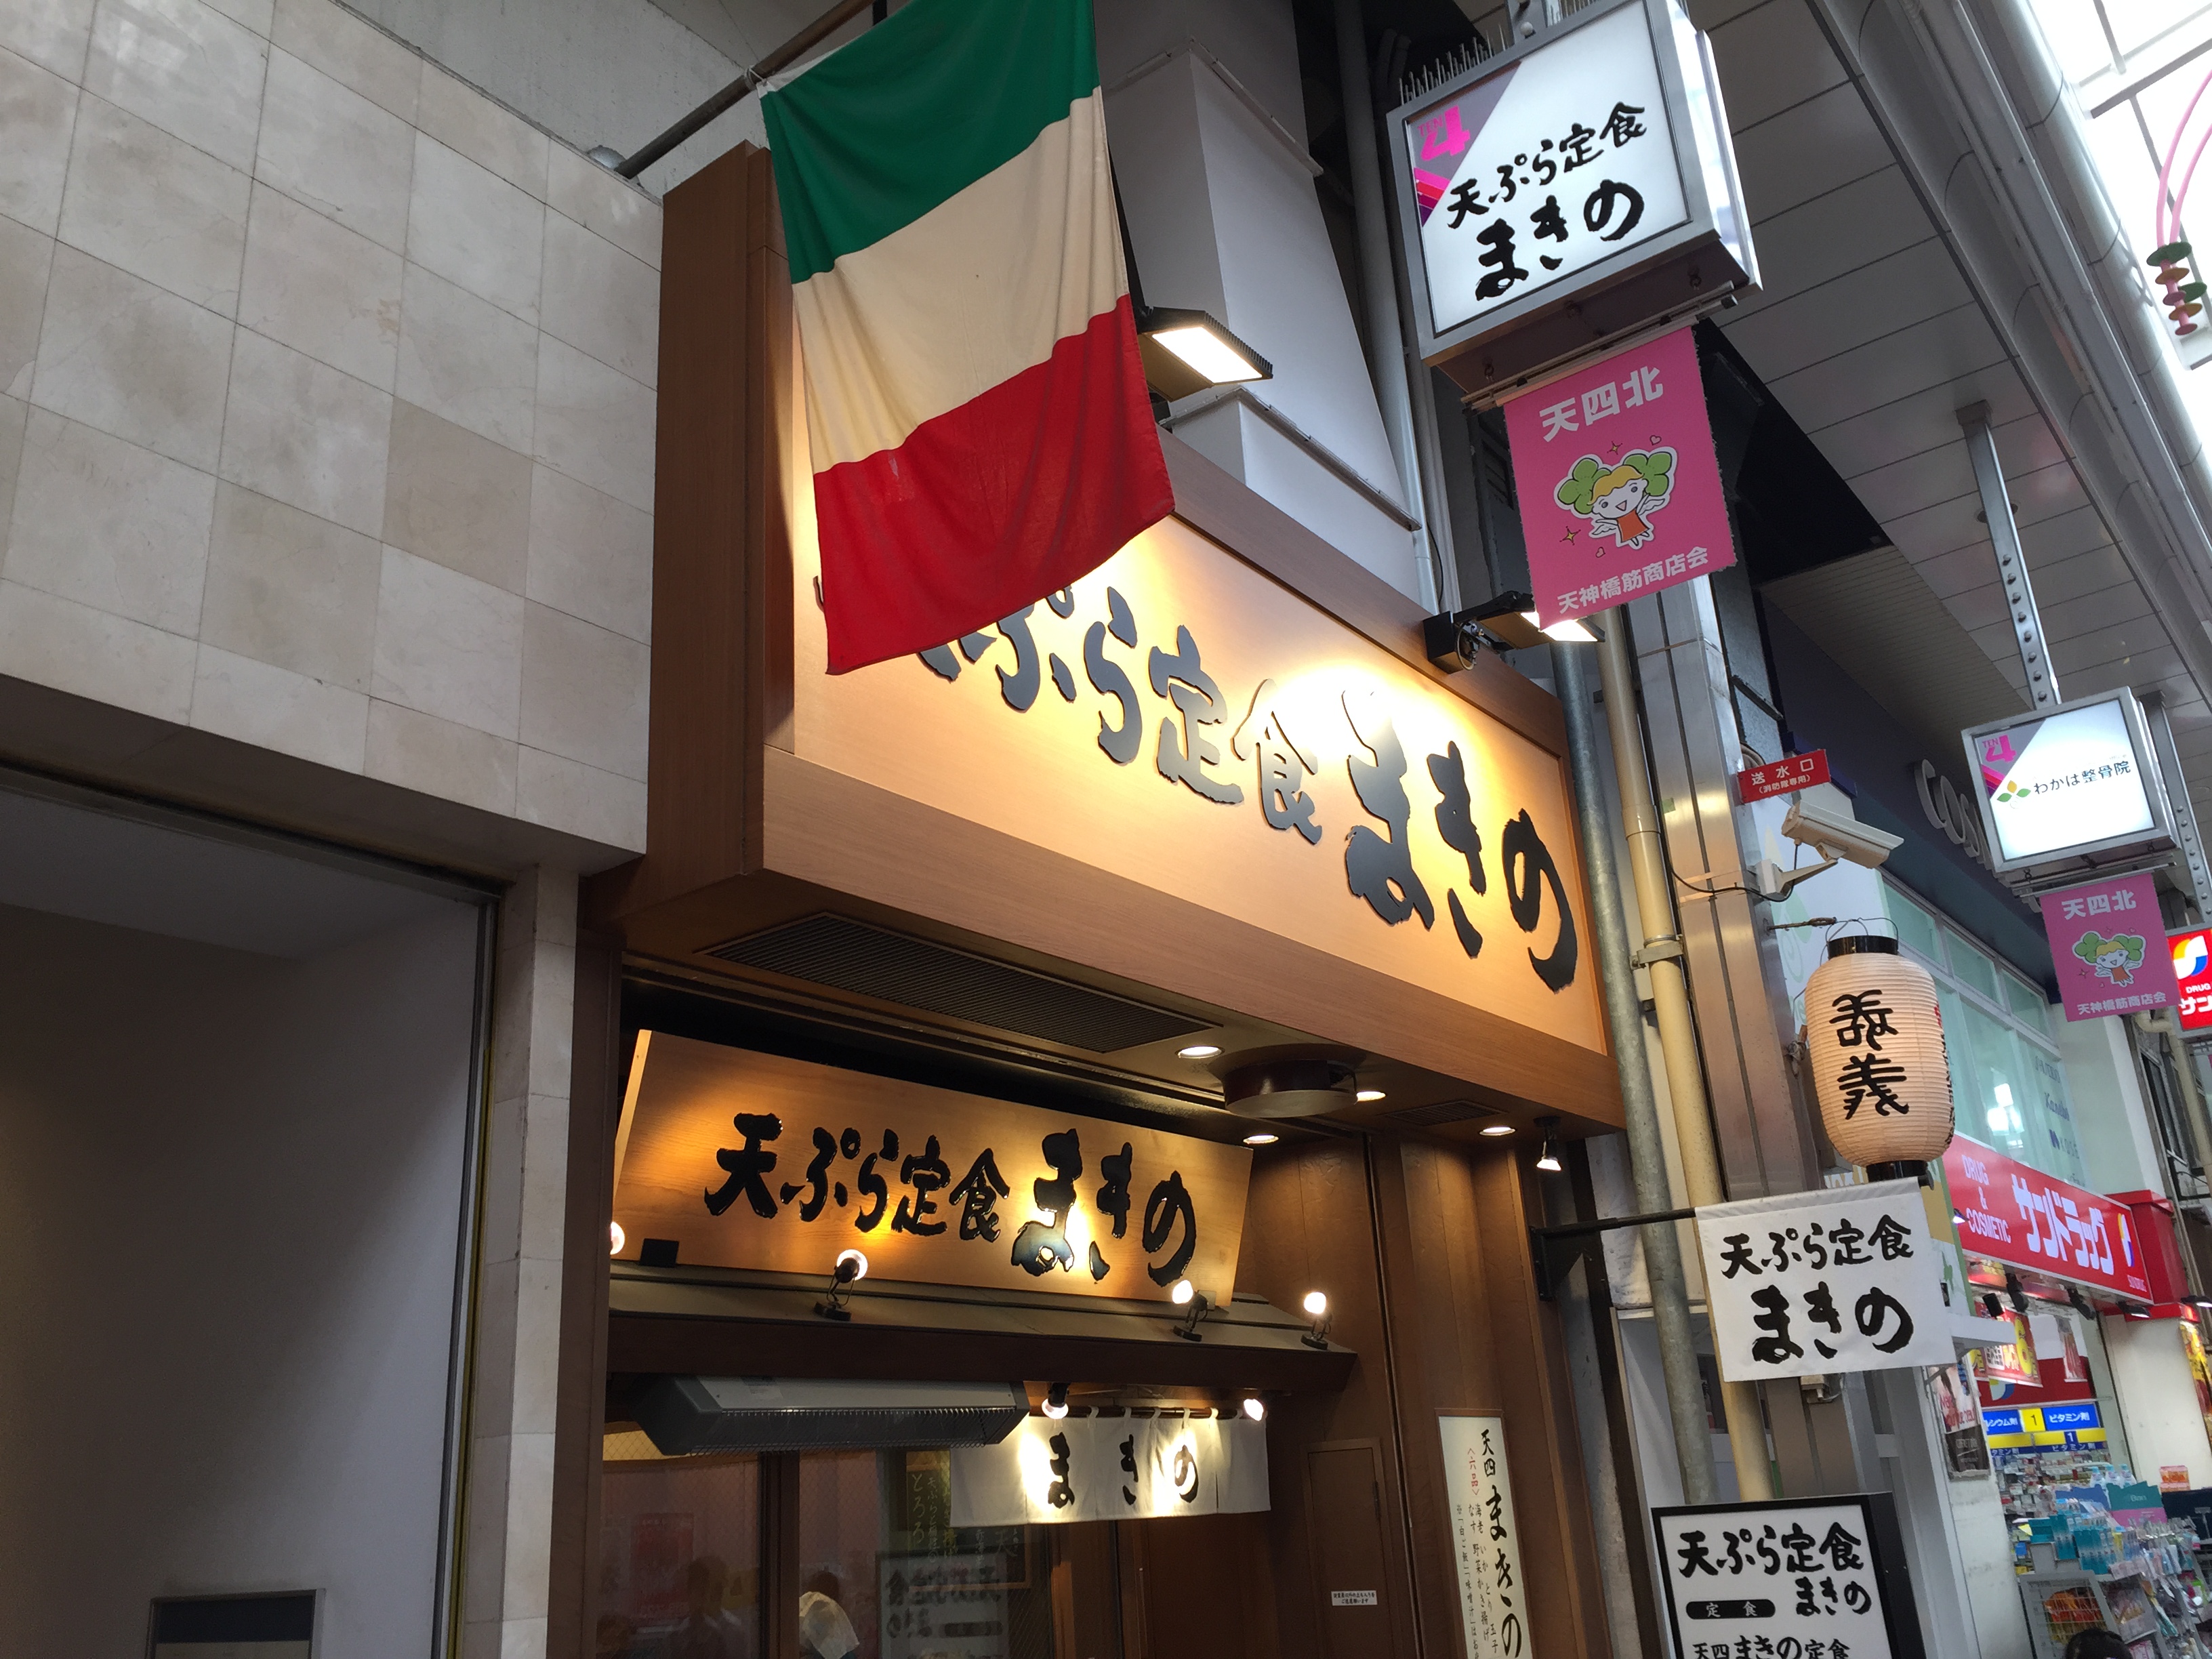 Local tells Top 5 best Tempura restaurants in Osaka! | 一期一会〜Ichigo Ichie〜